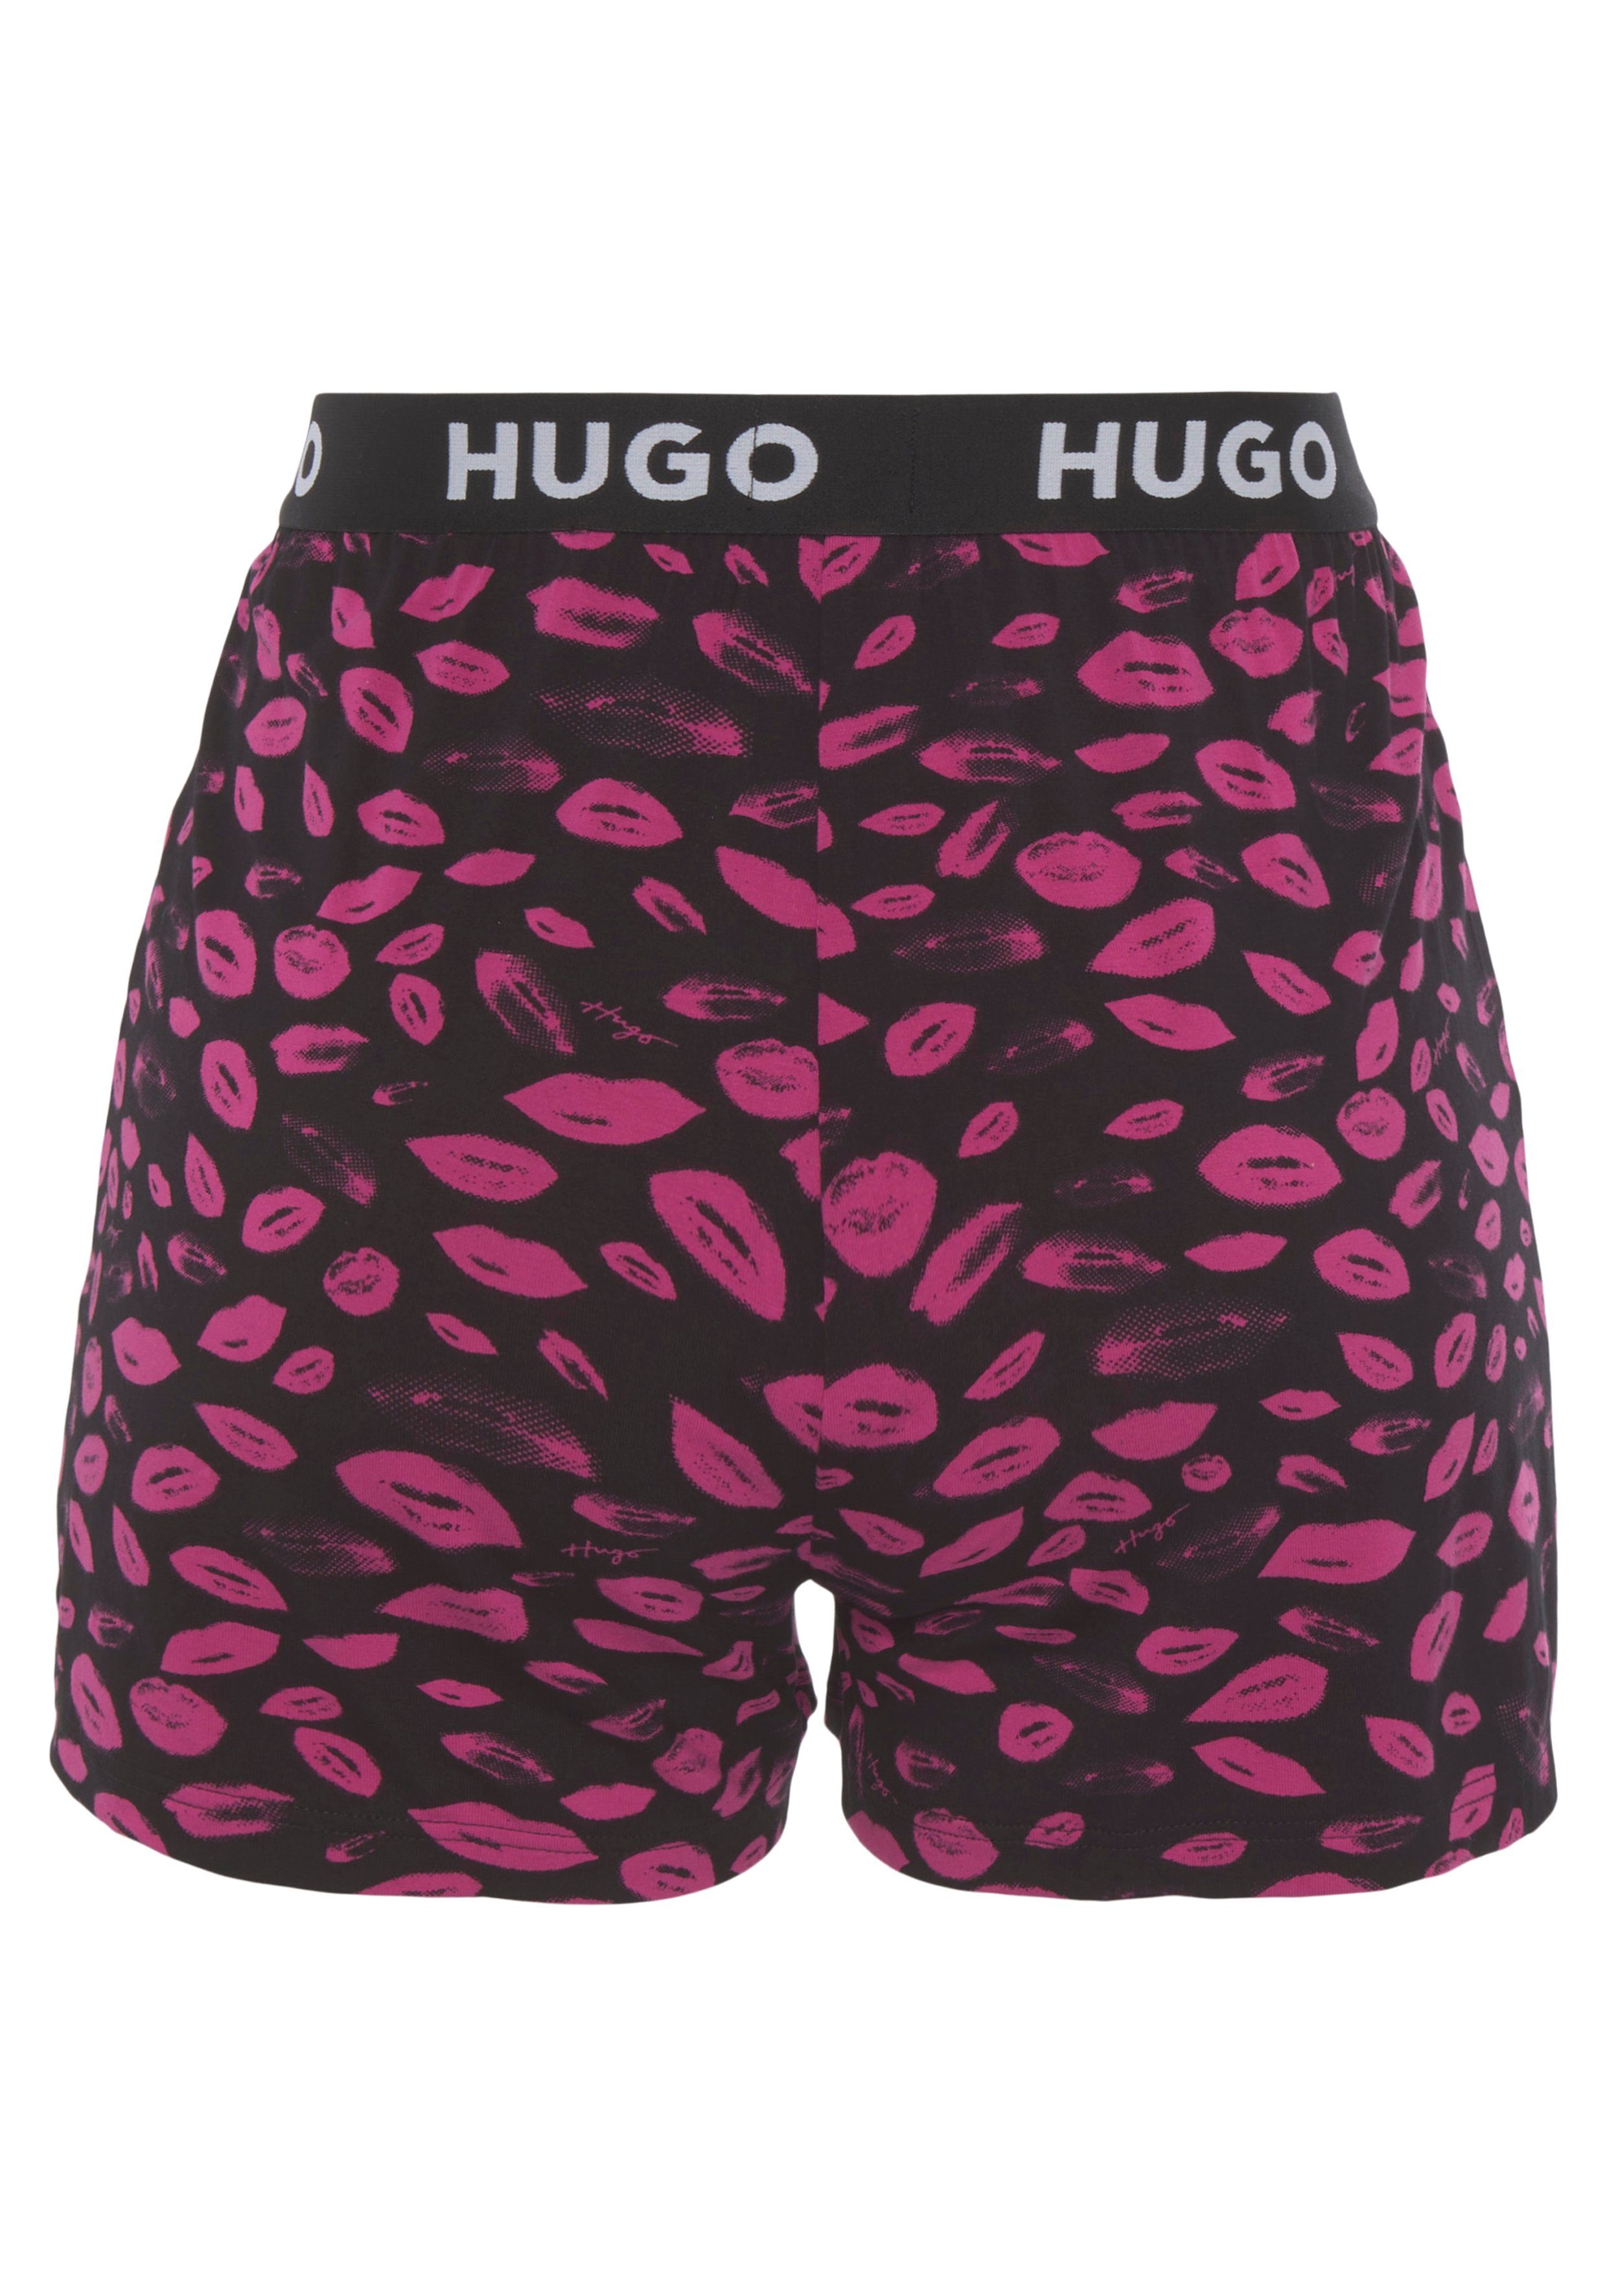 UNITE_SHORTS HUGO Shorts PRINTED